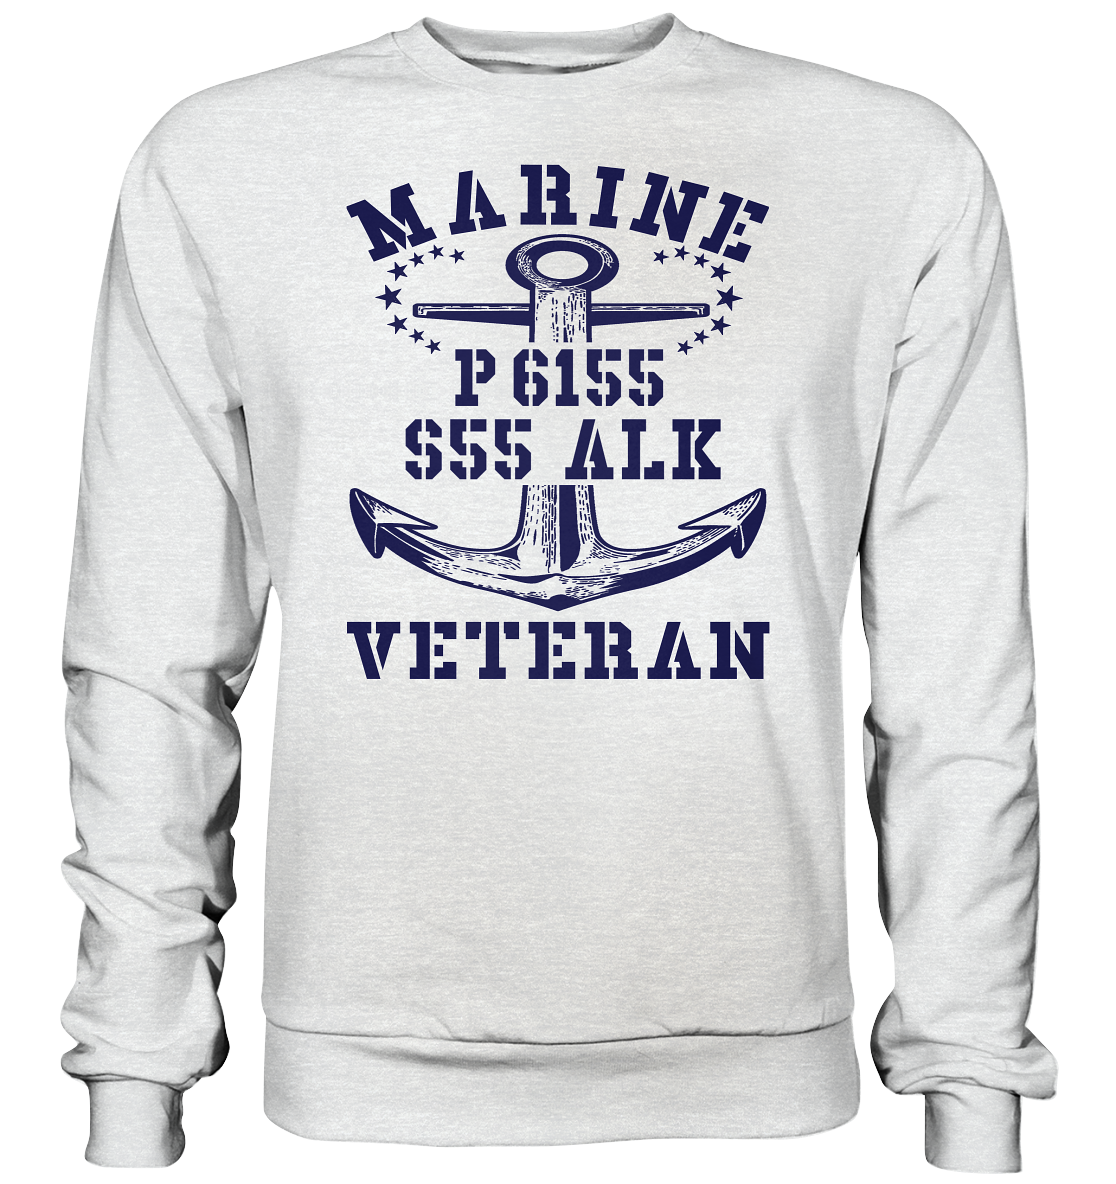 P6155 S55 ALK Marine Veteran - Premium Sweatshirt